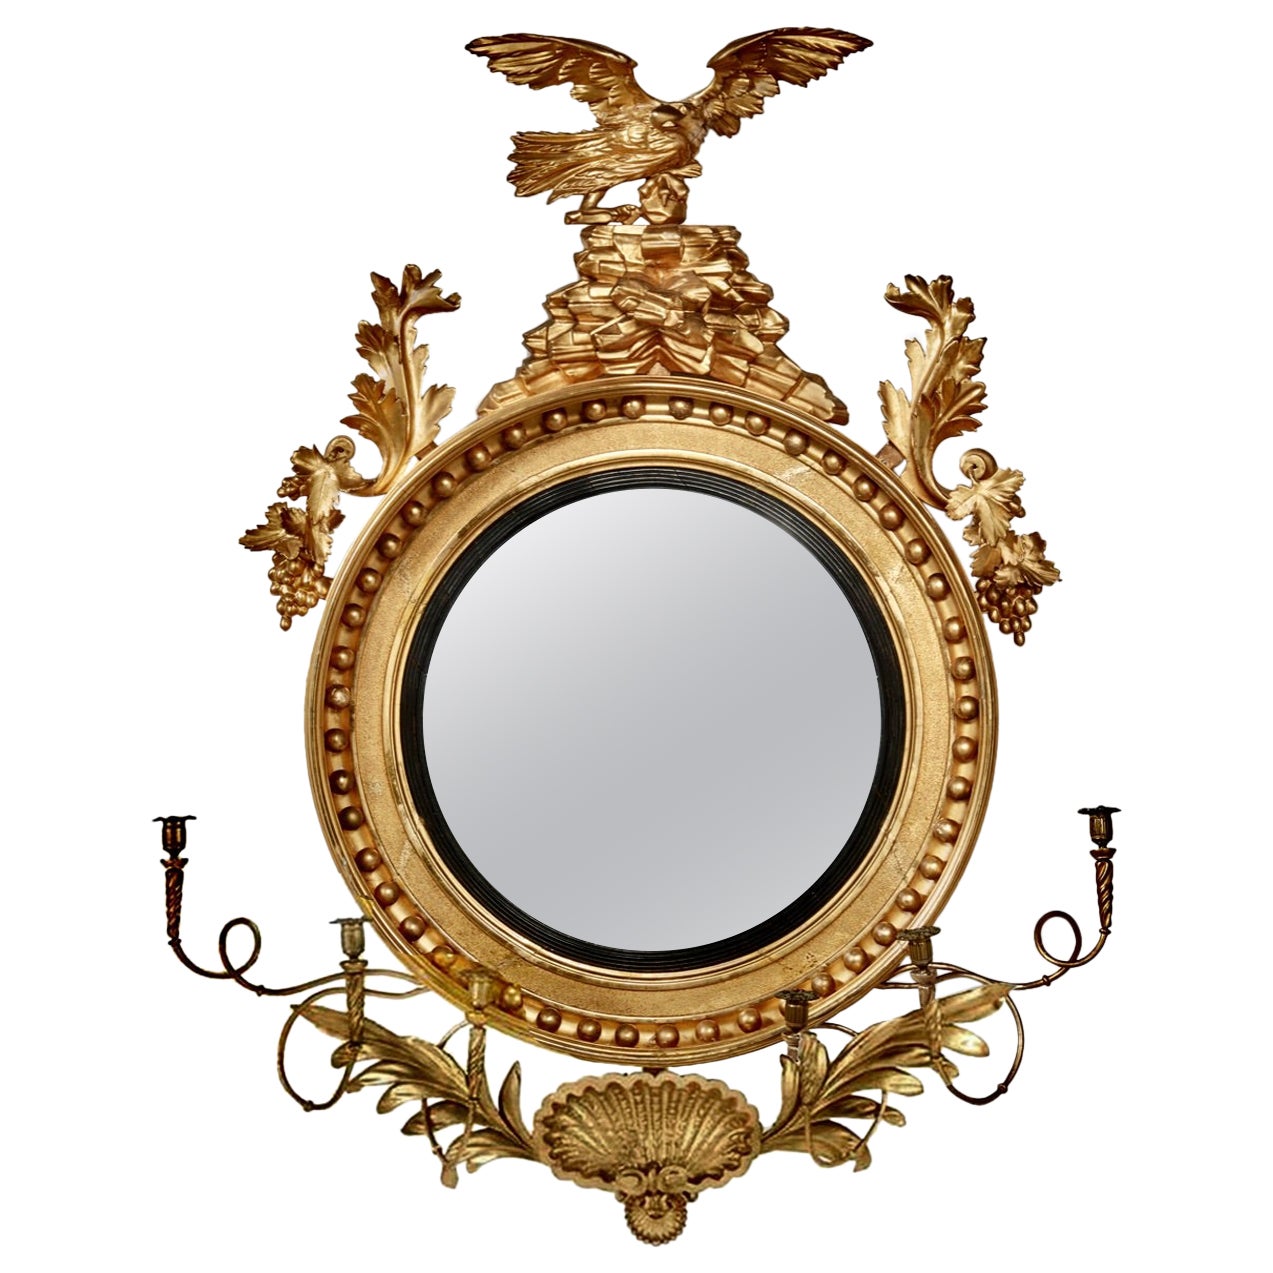 Early 19th Century American Giltwood Convex Girandole Mirror